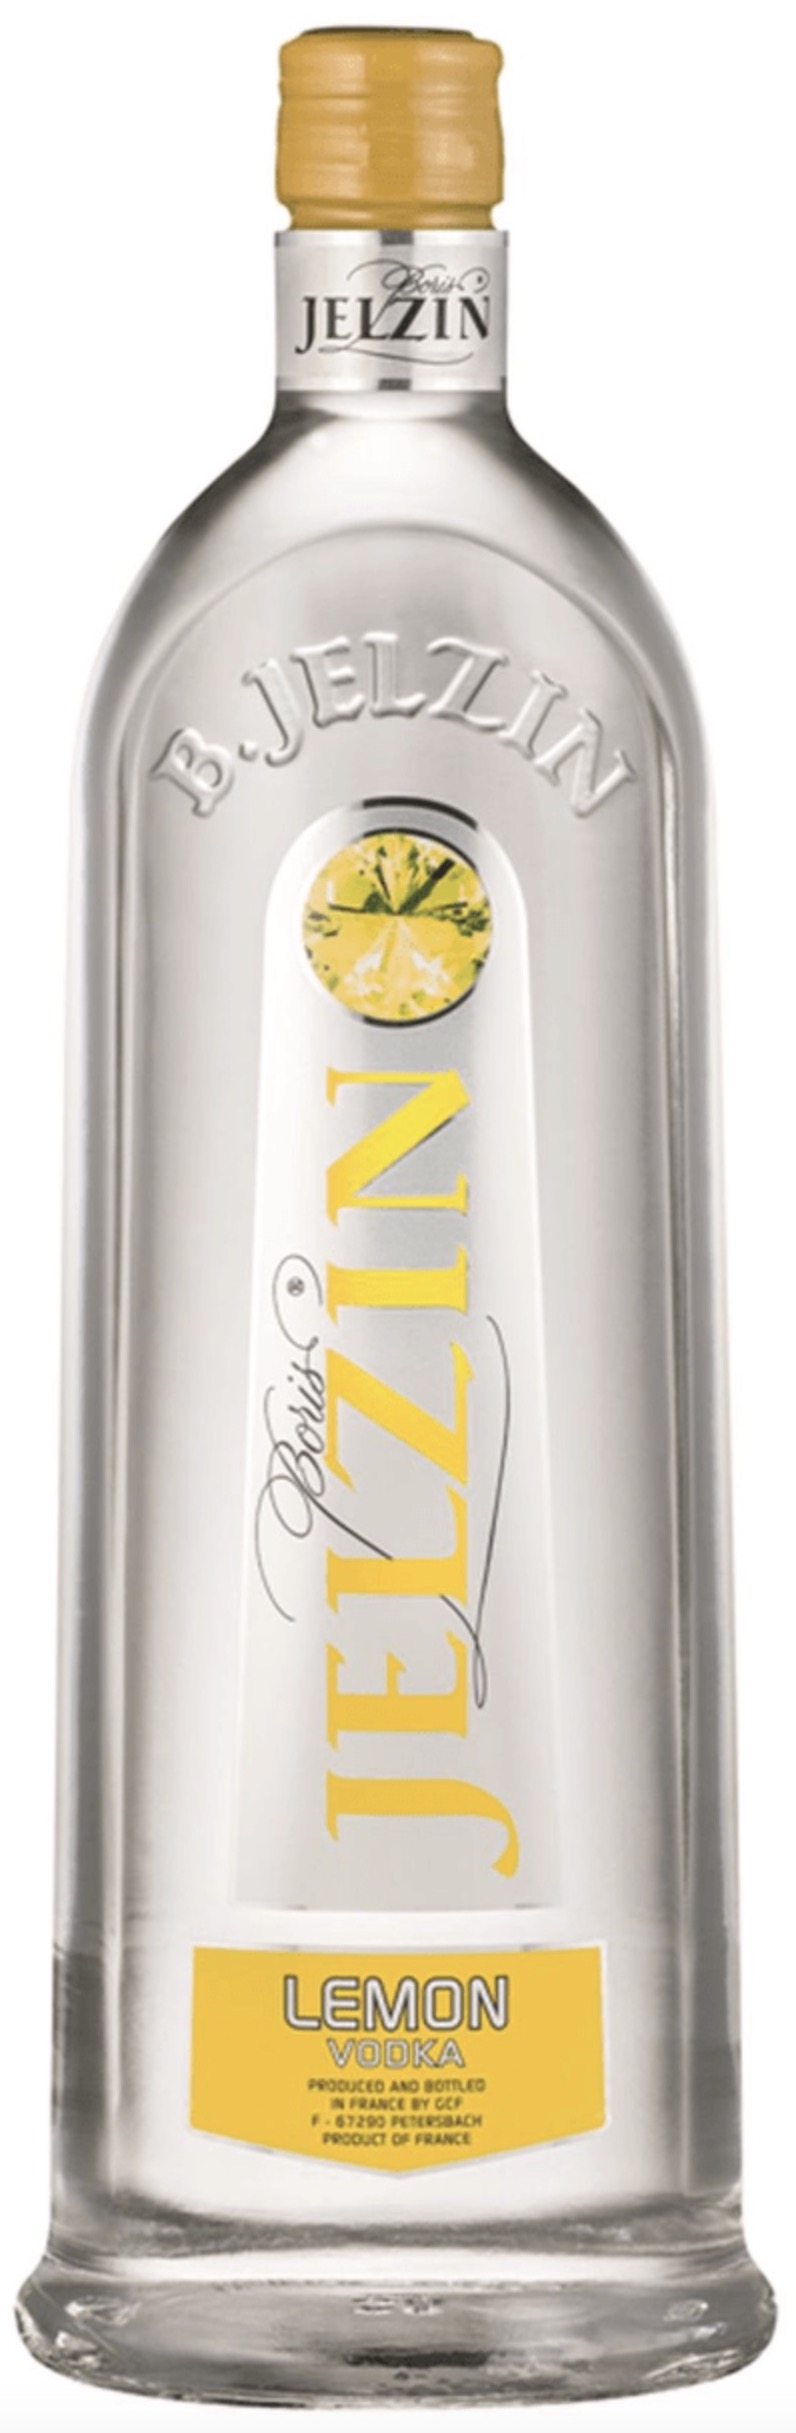 Jelzin Lemon Vodka 37,5%vol.  0,7L